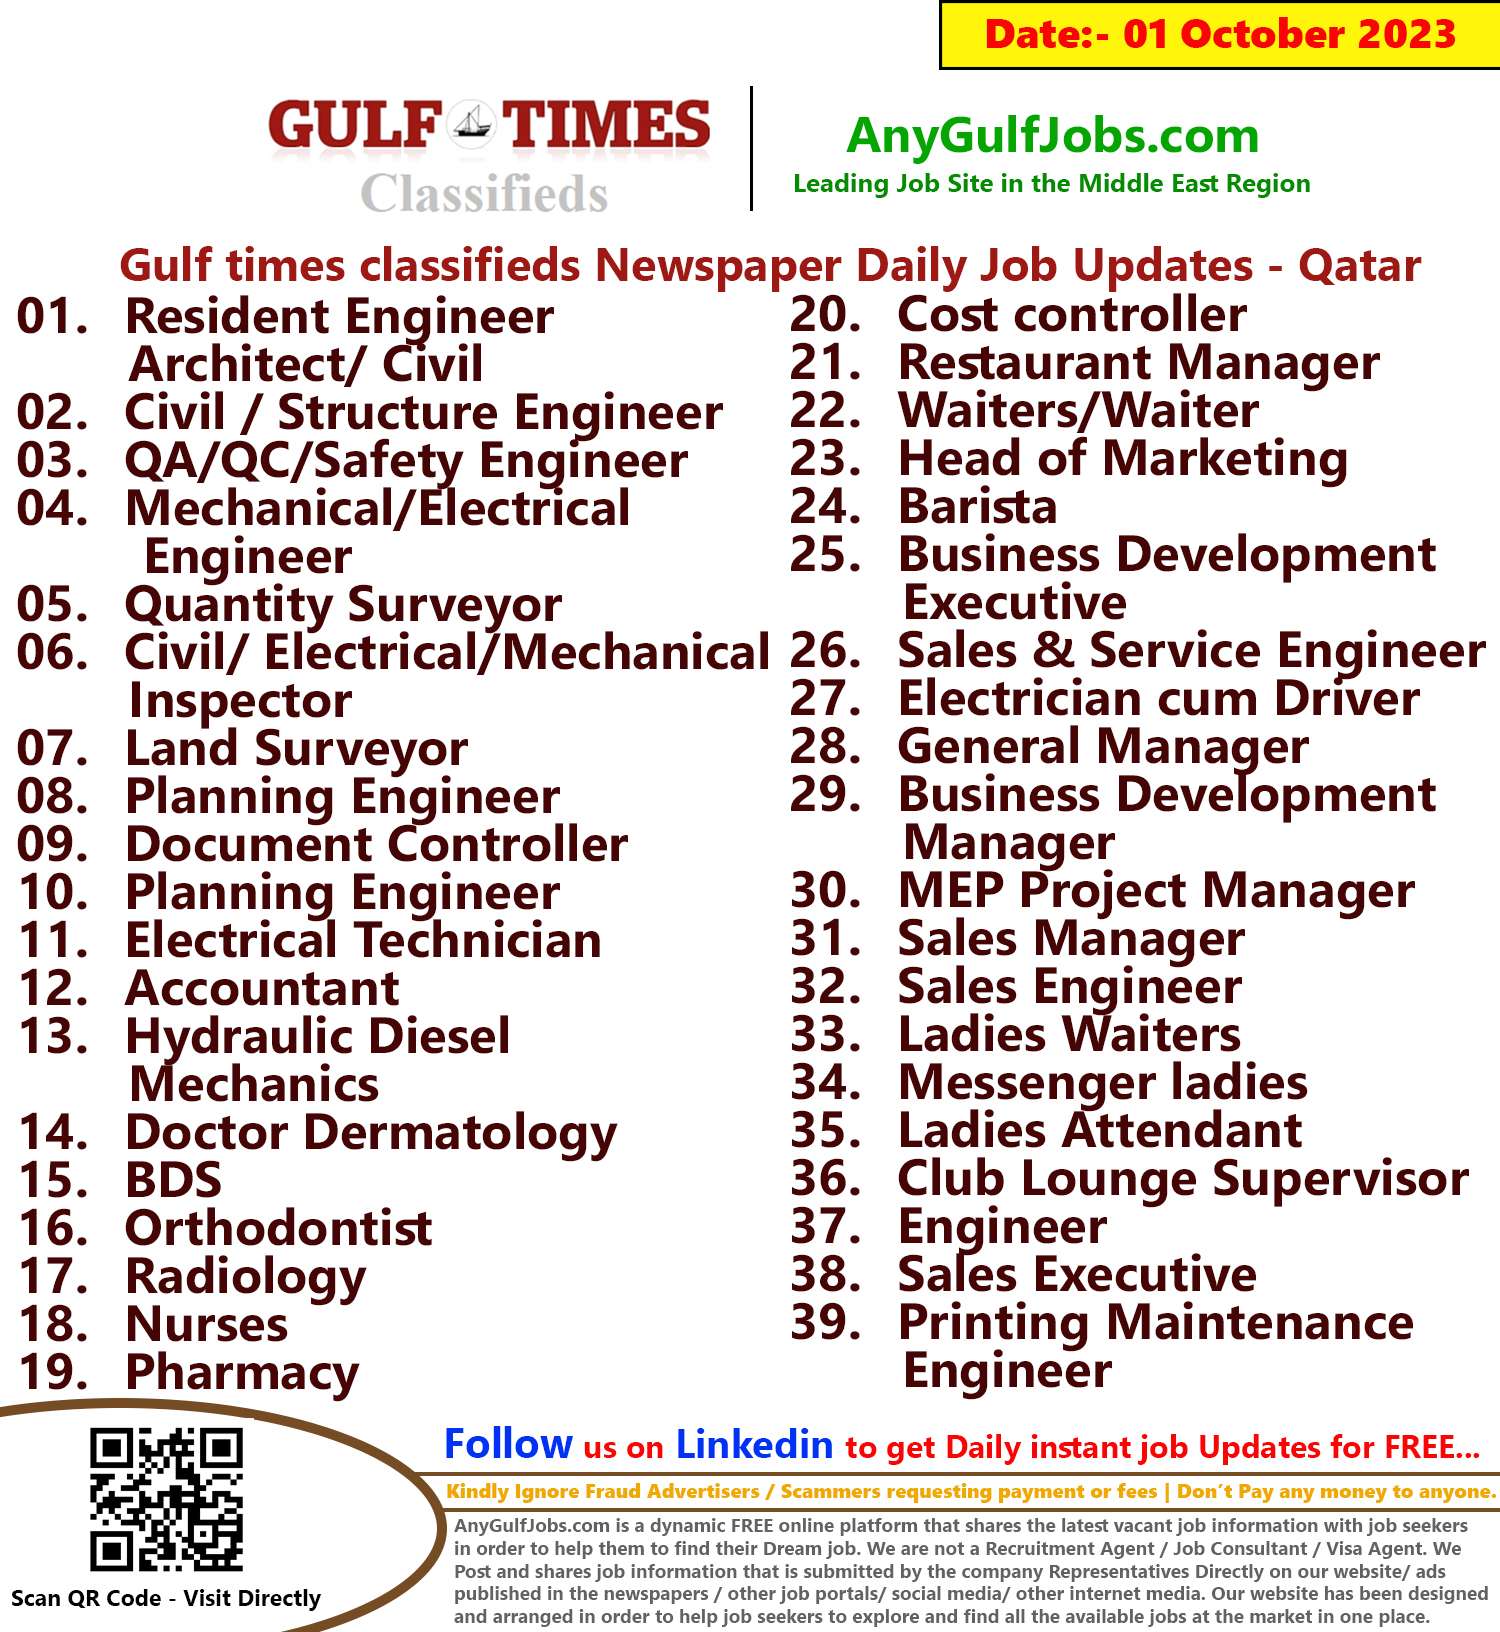 Gulf times classifieds Job Vacancies Qatar - 01 October 2023